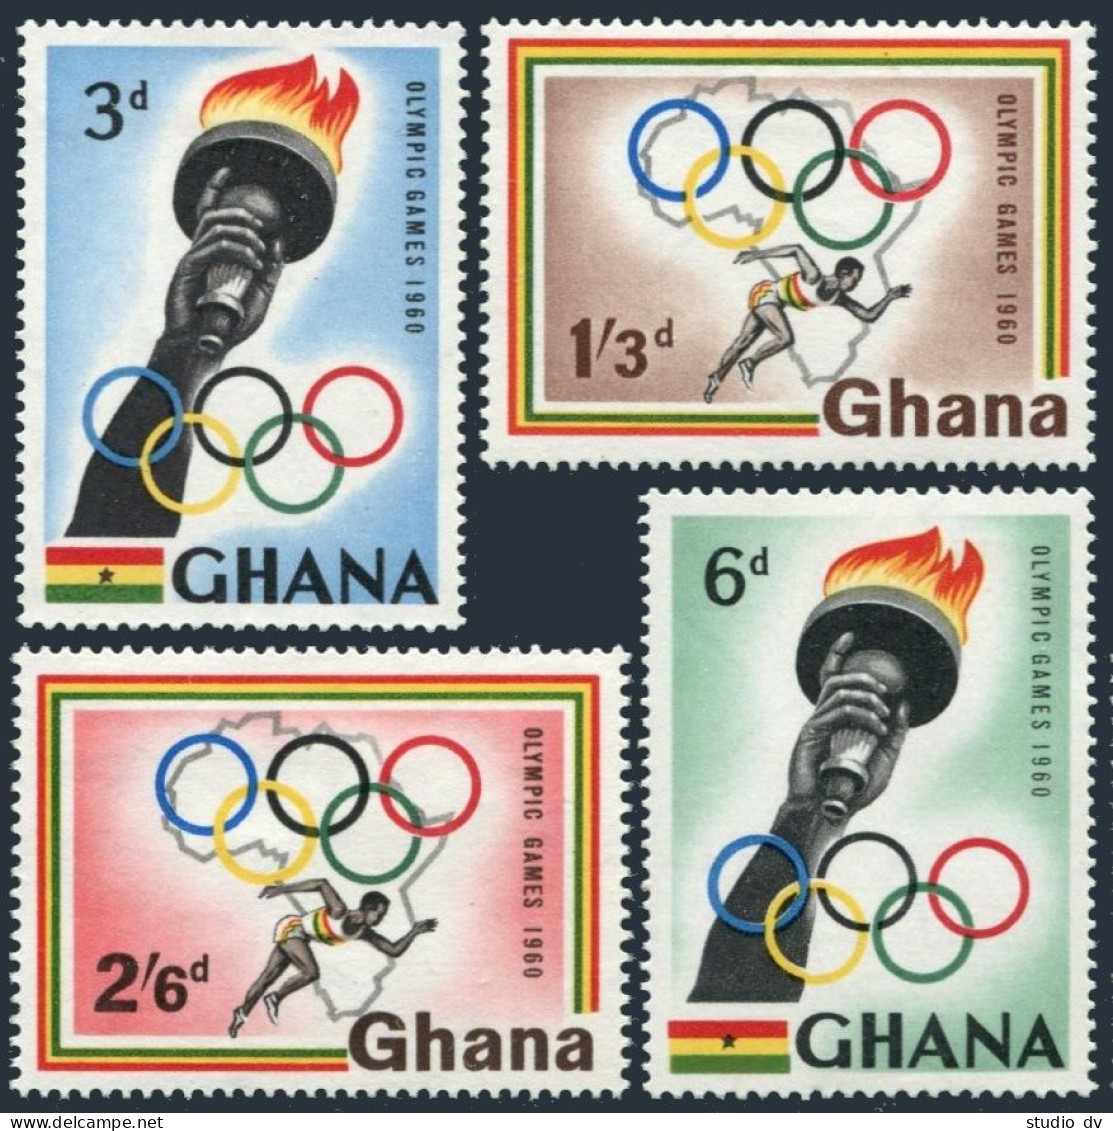 Ghana 82-85, MNH. Michel 84-87. Olympics Rome-1960. Torch, Runner, Map. - Voorafgestempeld